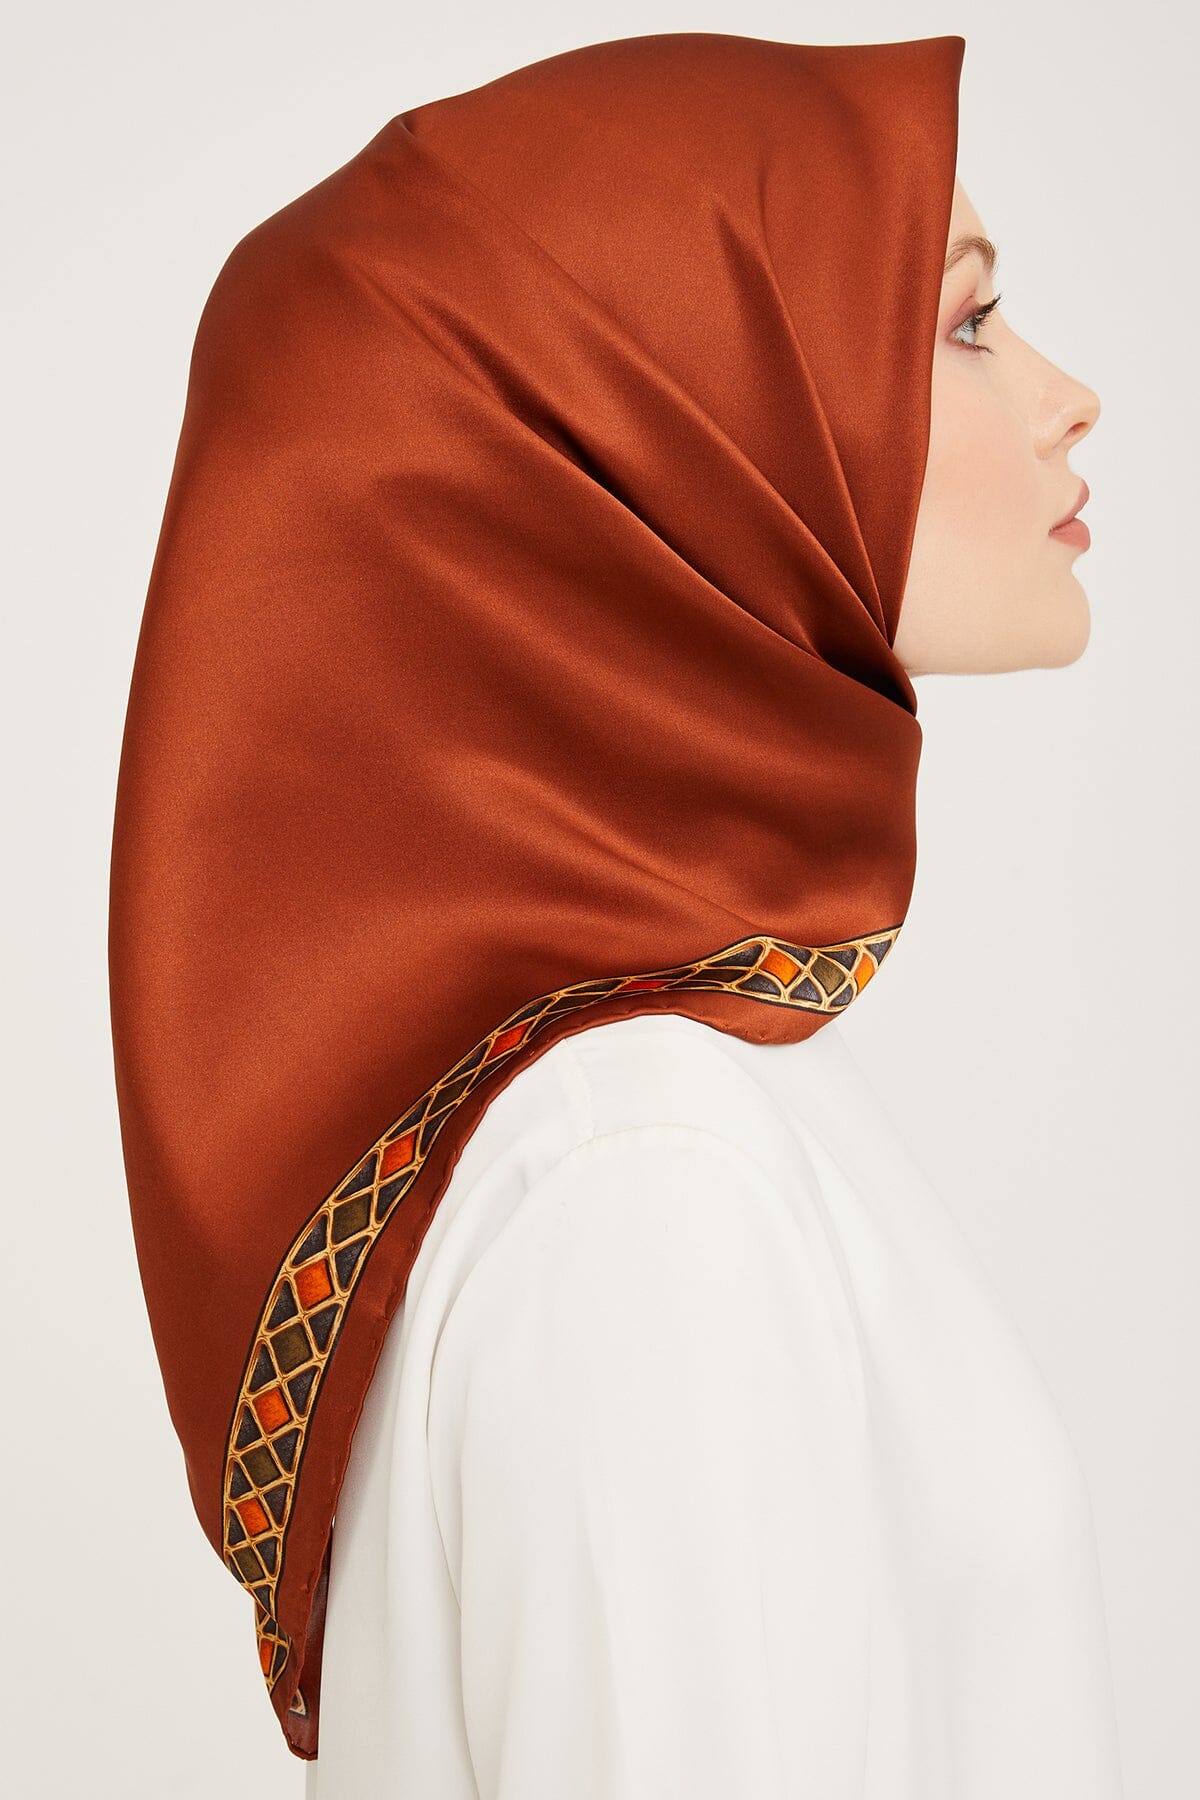 Armine Belle Classy Silk Scarf #32 Silk Hijabs,Armine Armine 